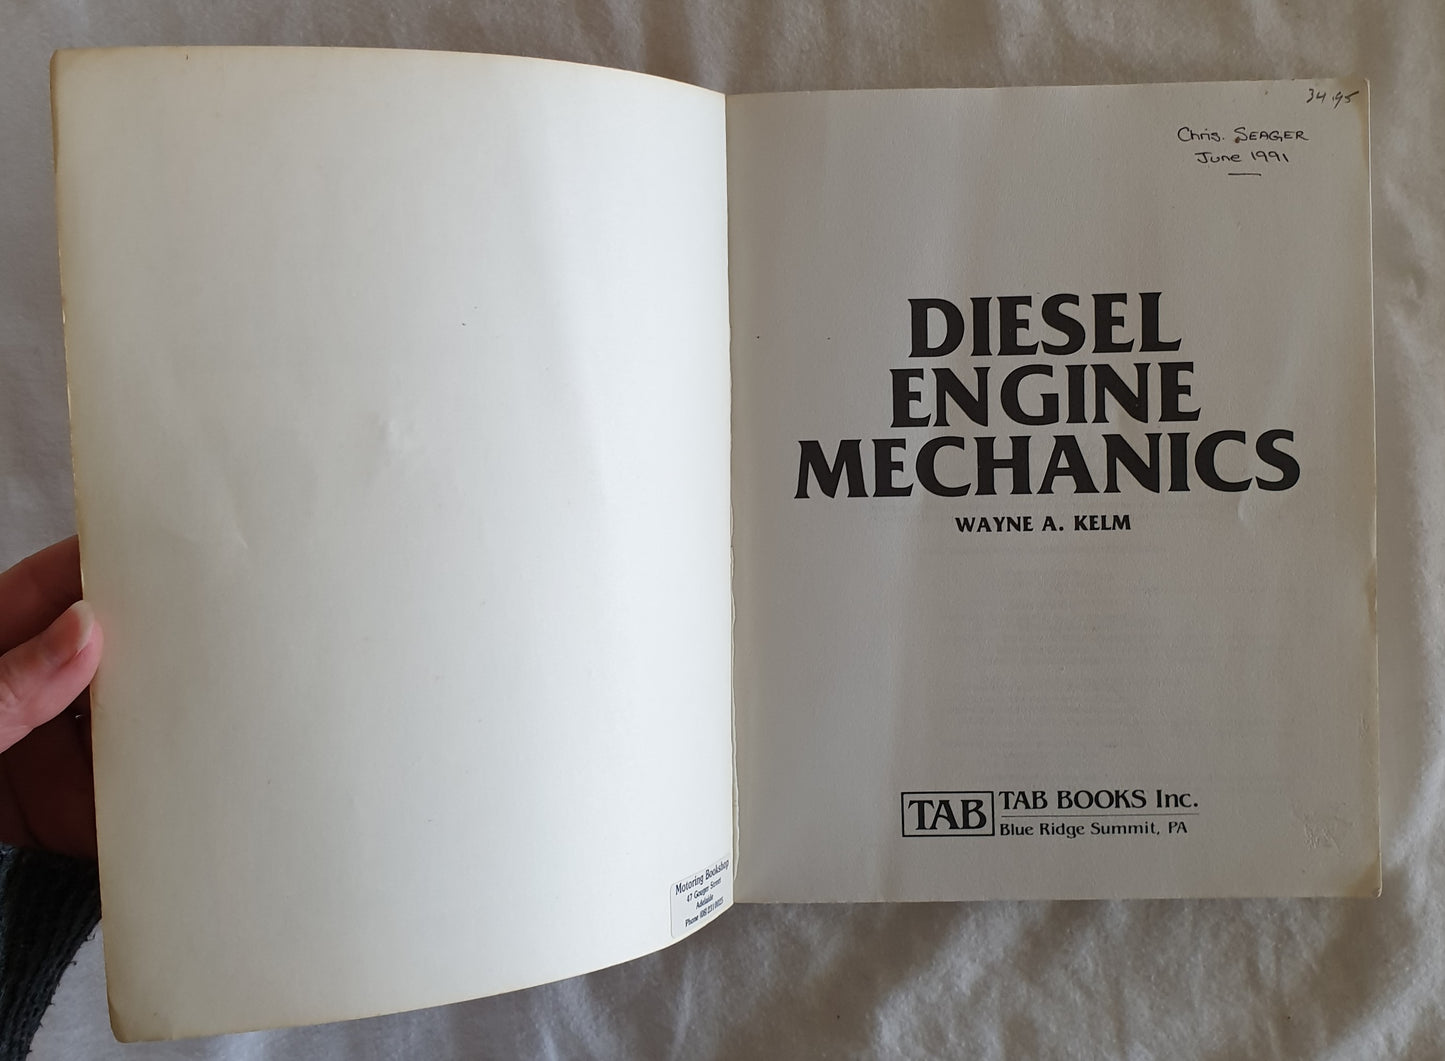 Diesel Engine Mechanics by Wayne A. Kelm